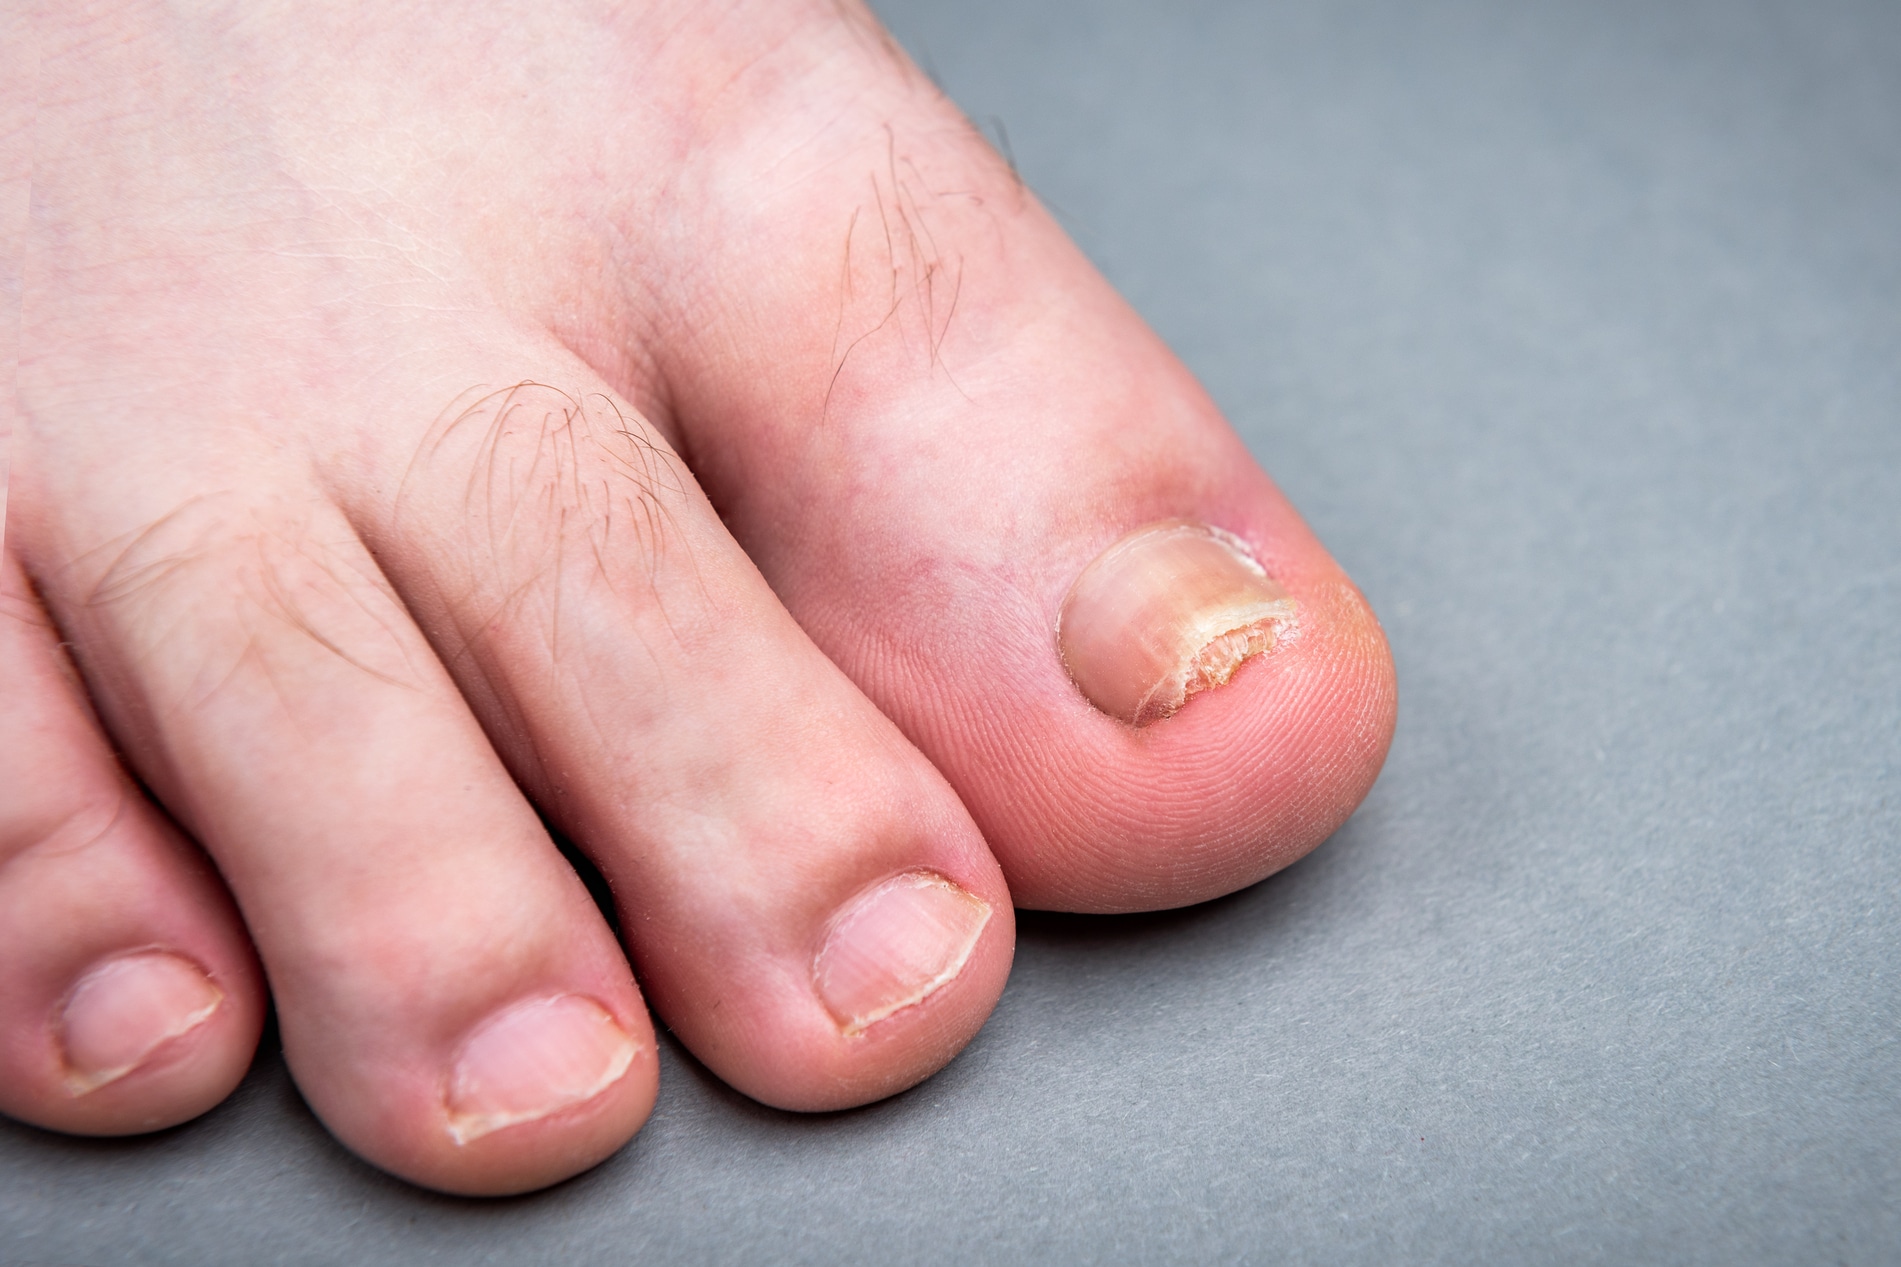 Fungal toenail treatment in Australia - Clear Step Podiatry